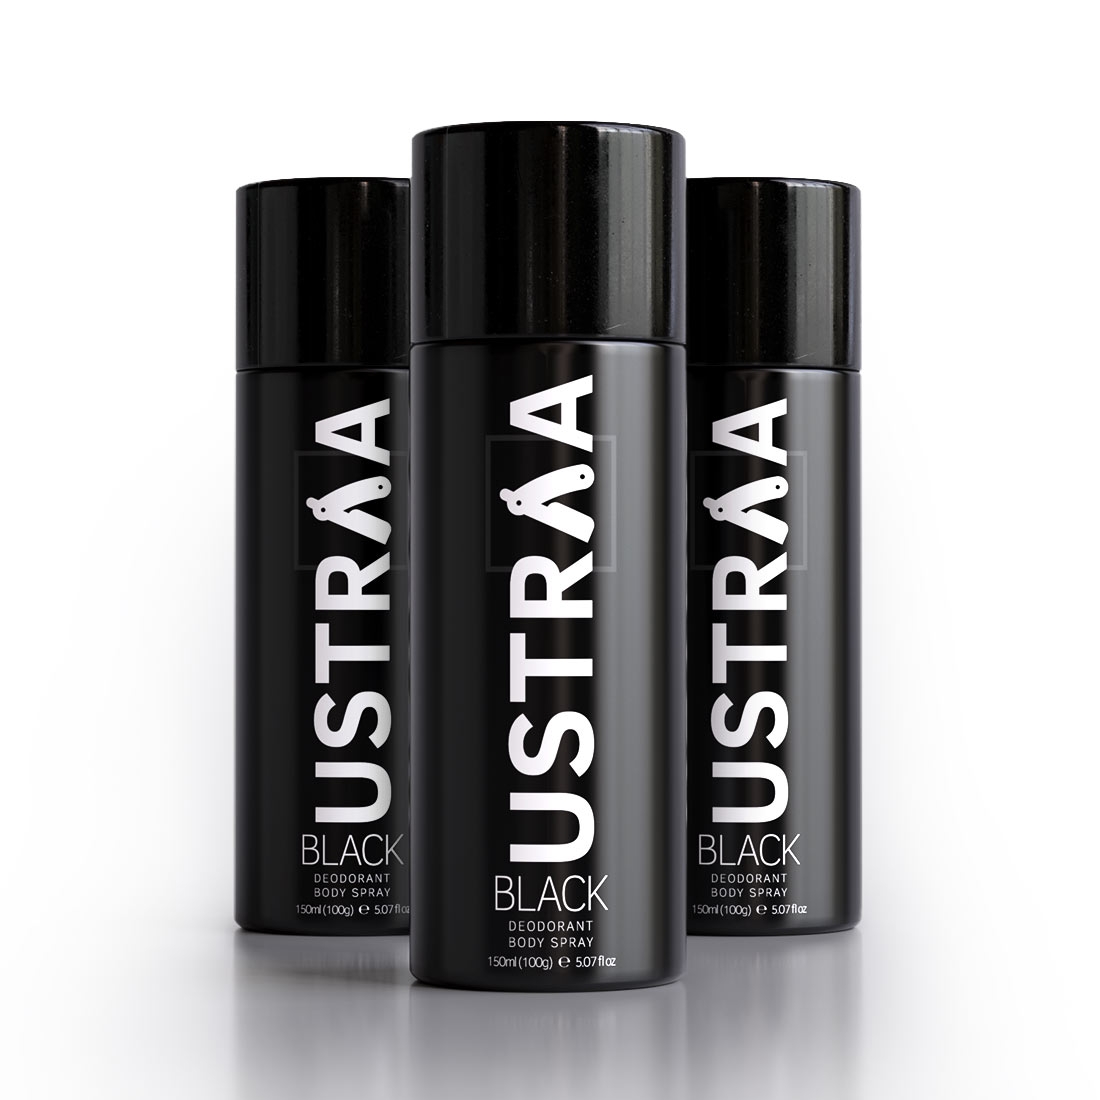 Ustraa | Ustraa BlackBlue Deodorant Body Spray, 150 ml- Set of 3